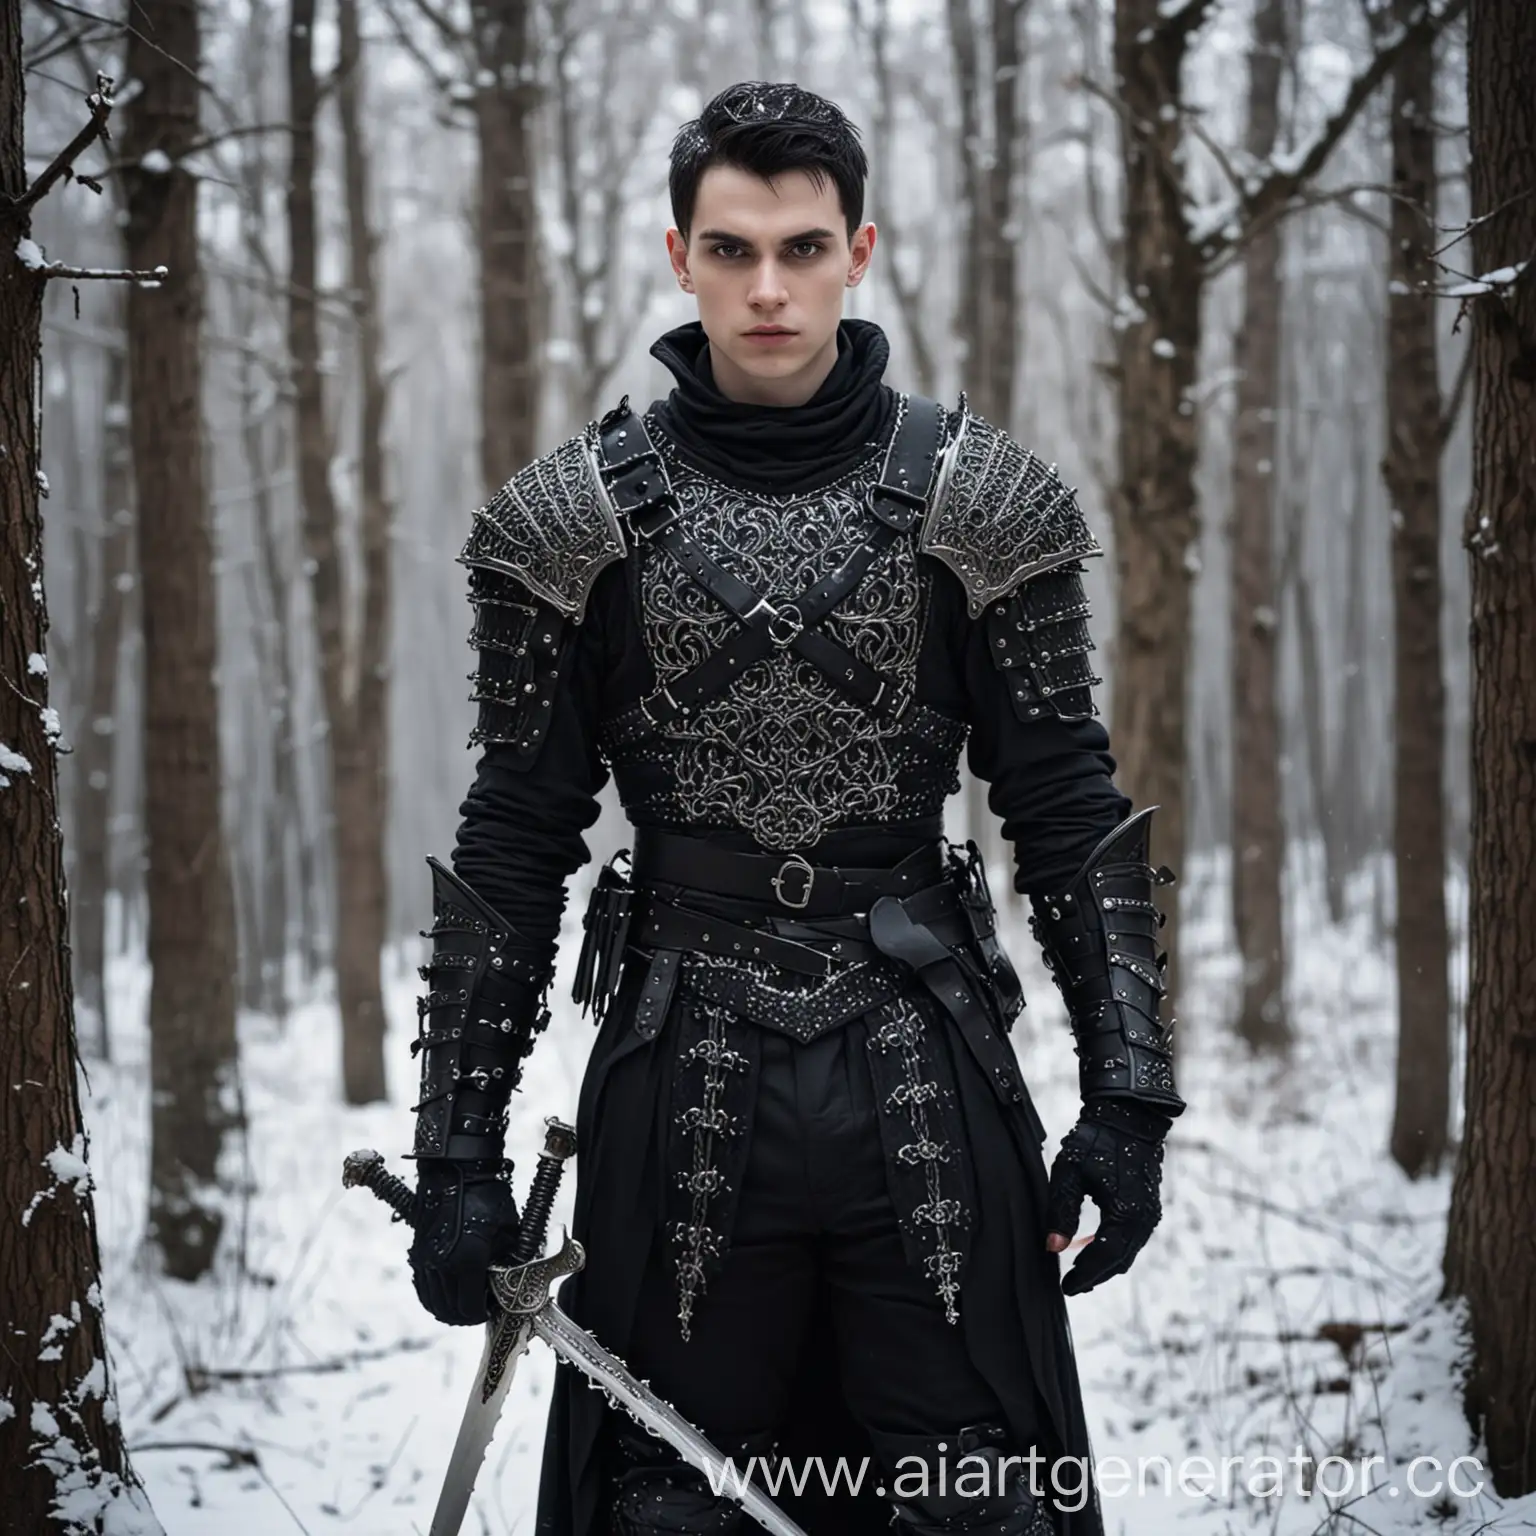 Gothic-Fantasy-Warrior-in-Black-Chainmail-in-Winter-Forest